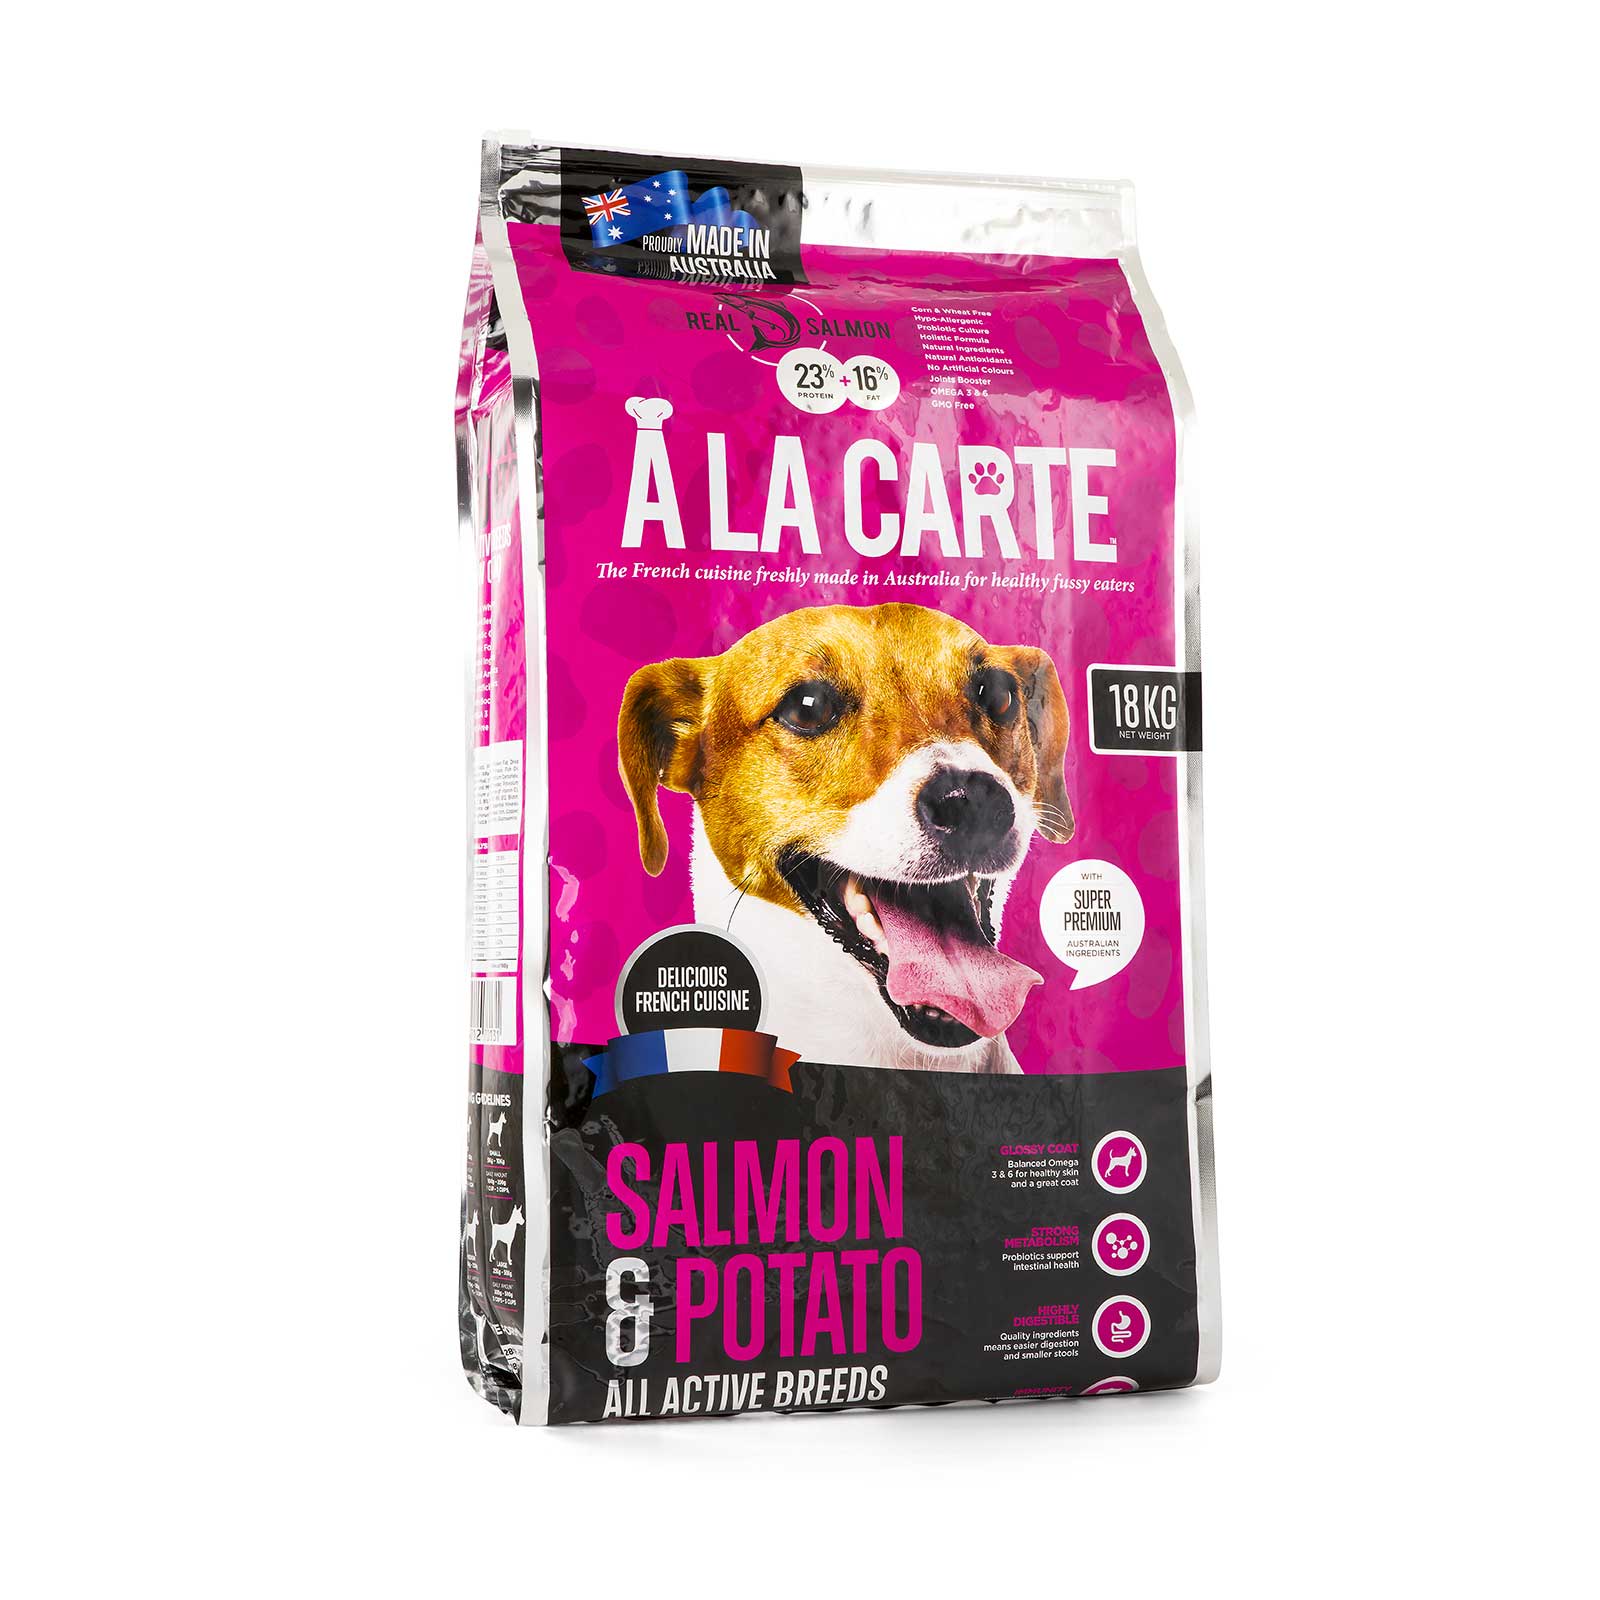 A La Carte Dog Food Adult Salmon & Potato